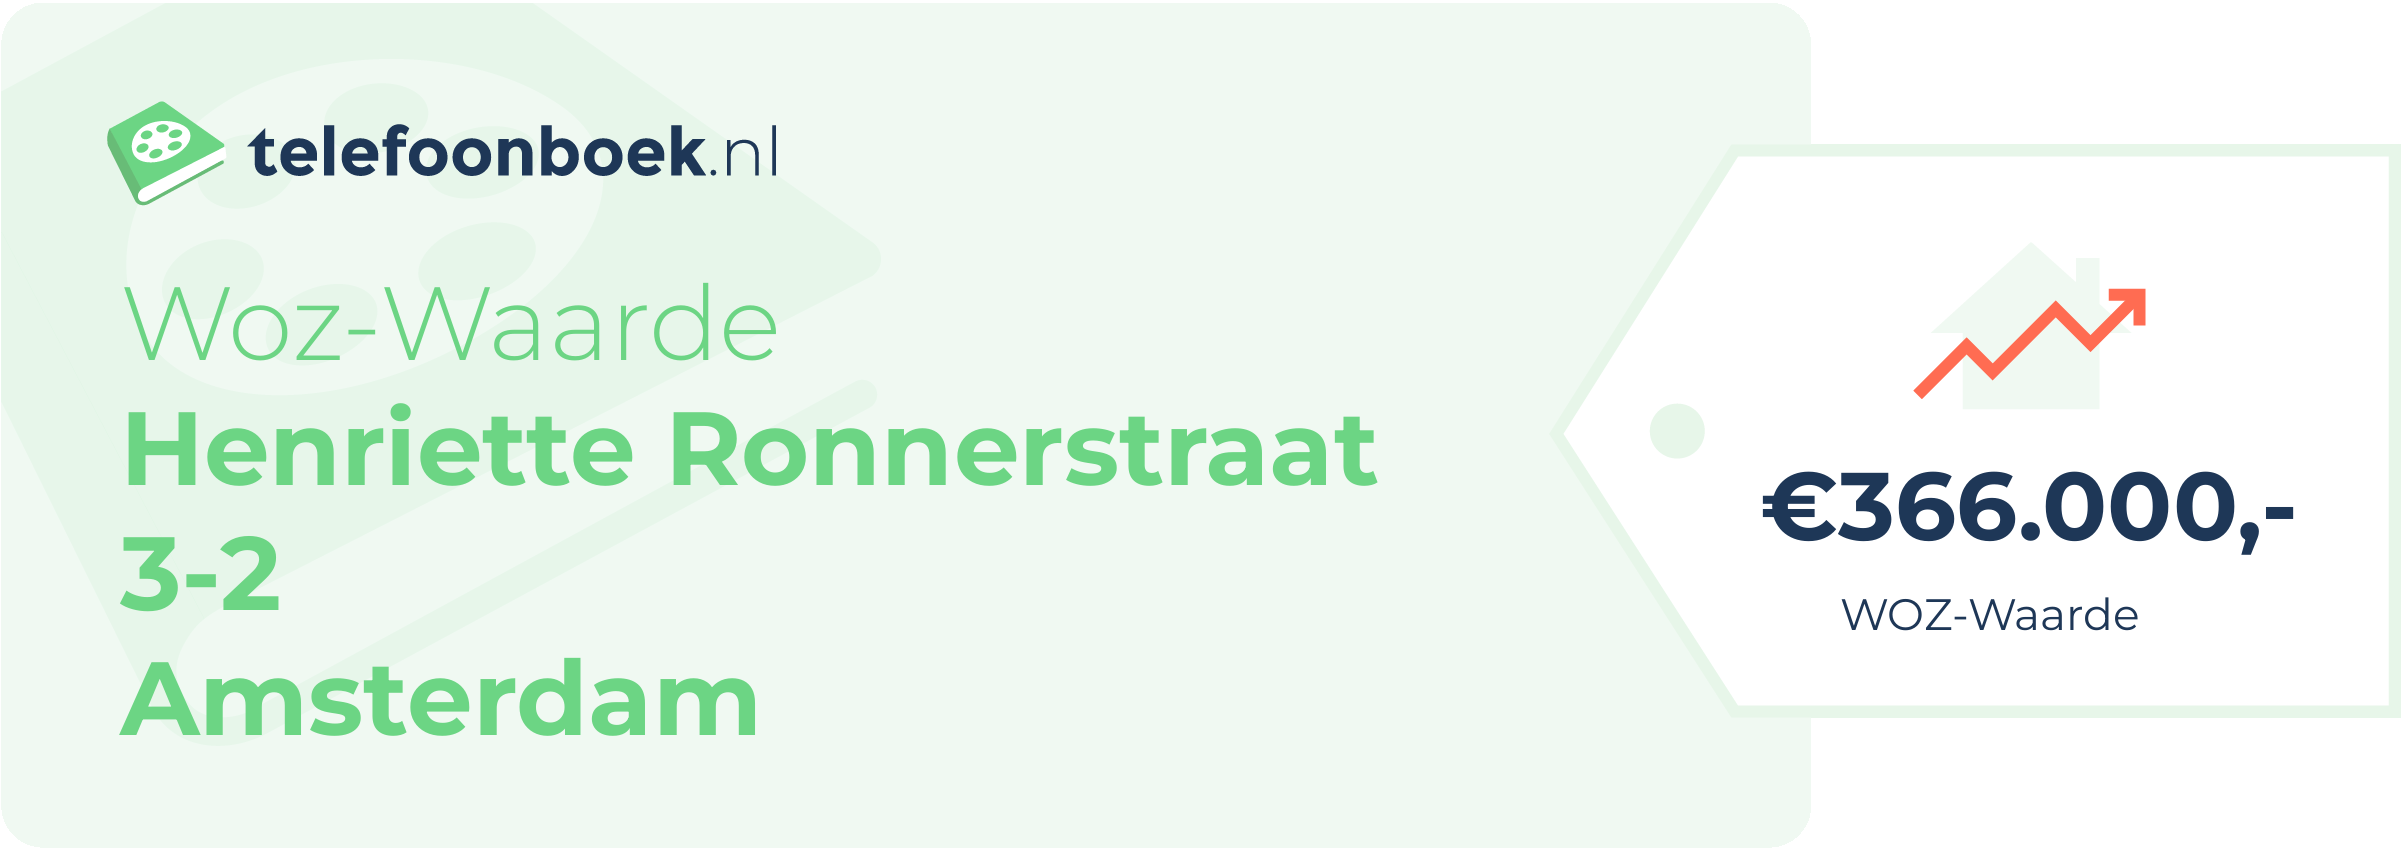 WOZ-waarde Henriette Ronnerstraat 3-2 Amsterdam